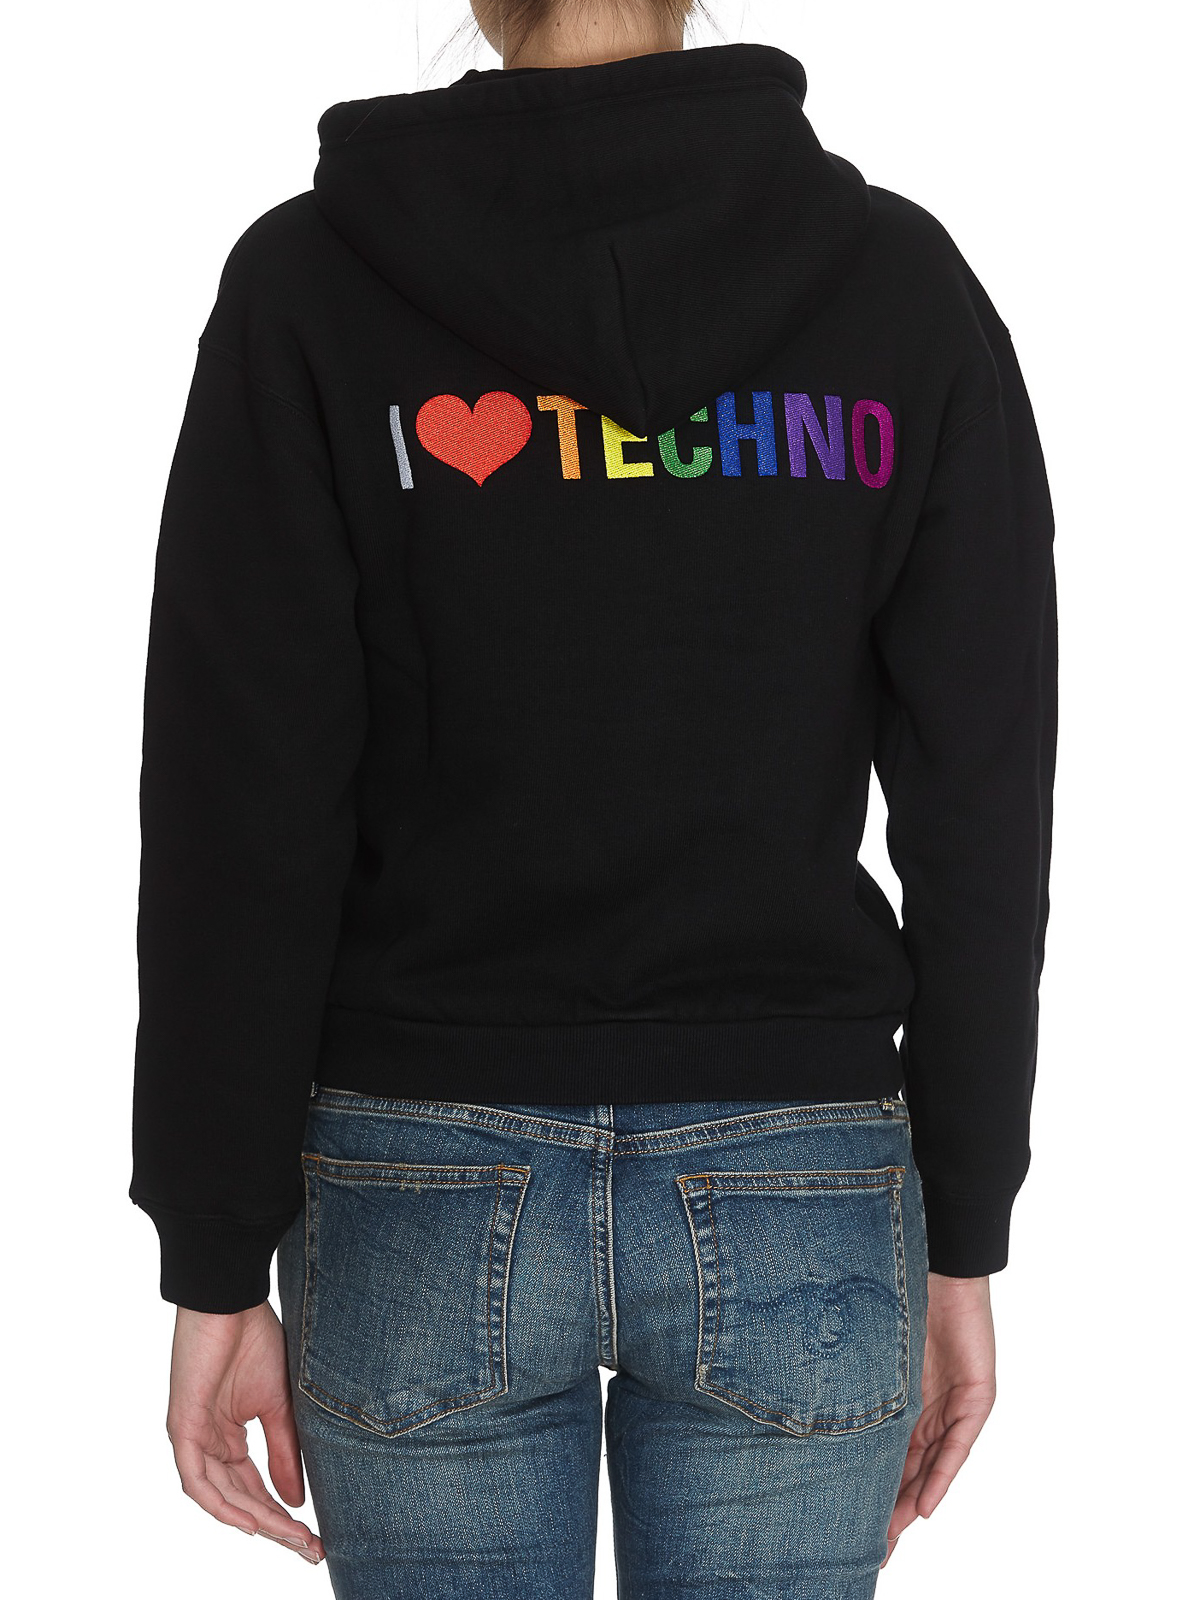 i love techno hoodie